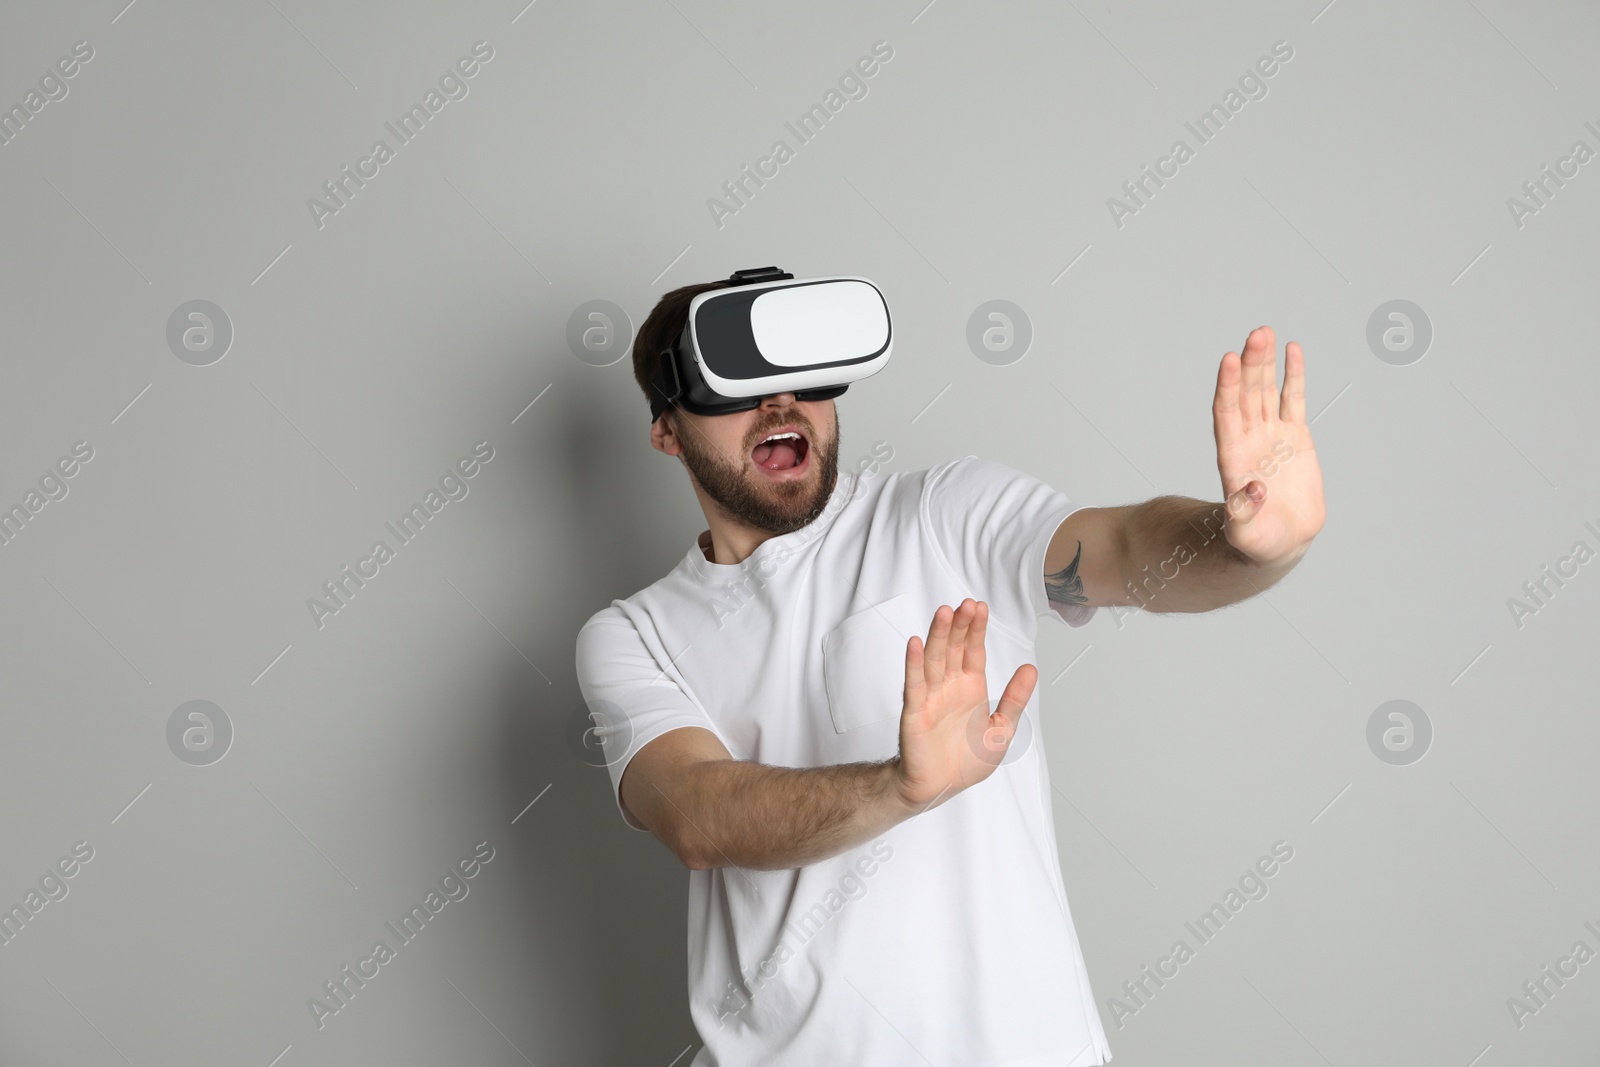 Photo of Emotional man using virtual reality headset on light grey background